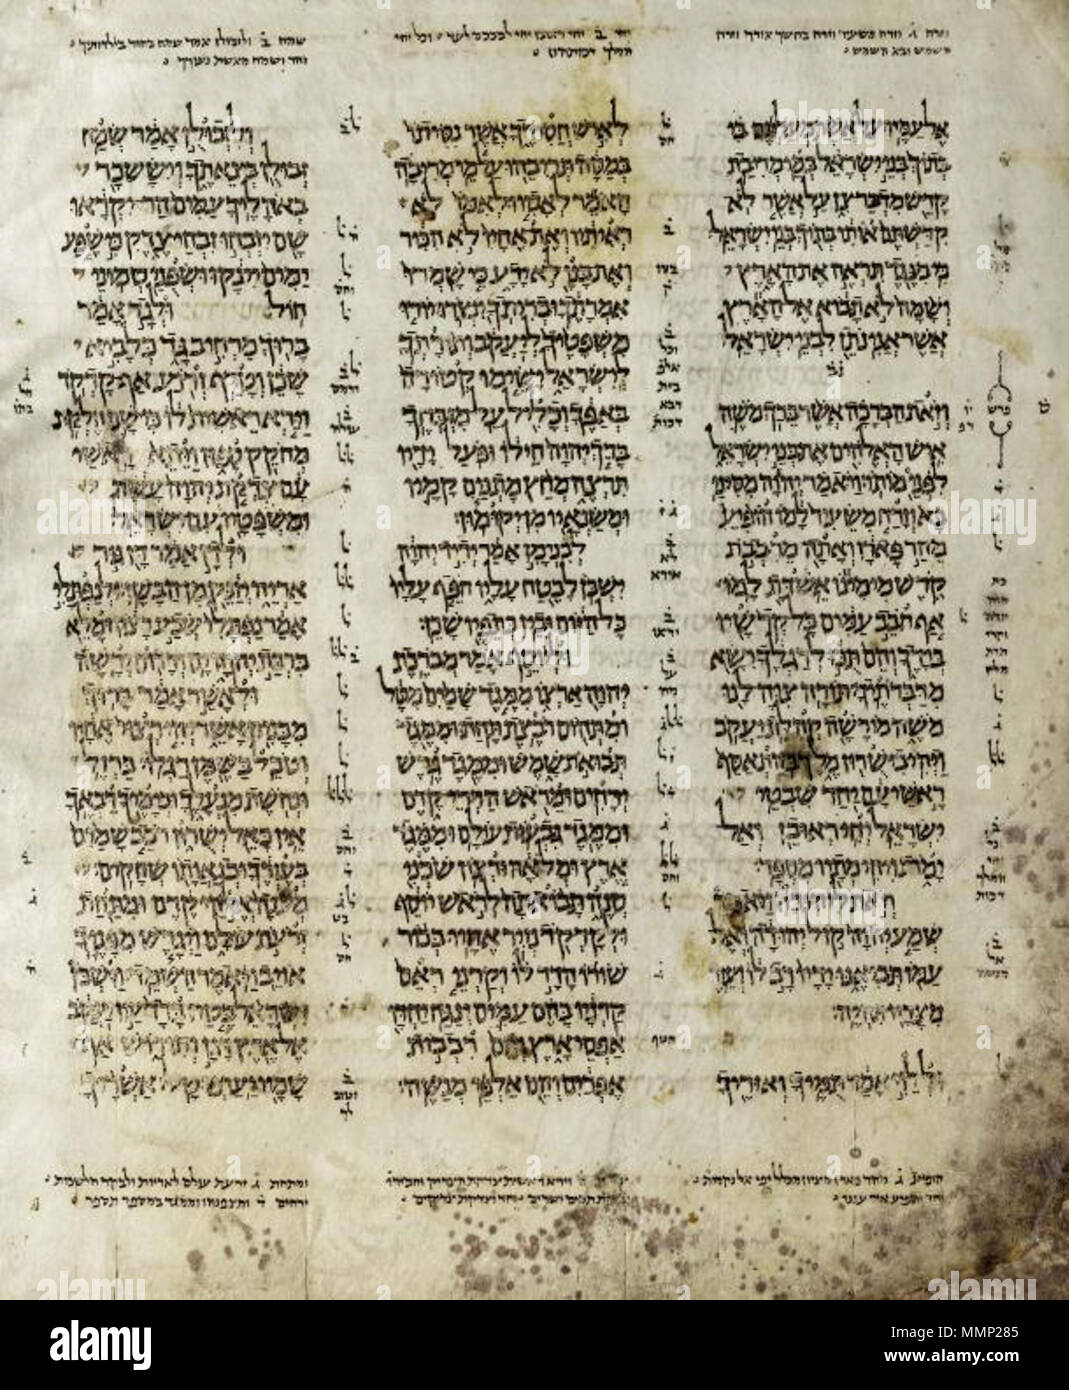 Hebrew manuscript -Fotos und -Bildmaterial in hoher Auflösung – Alamy